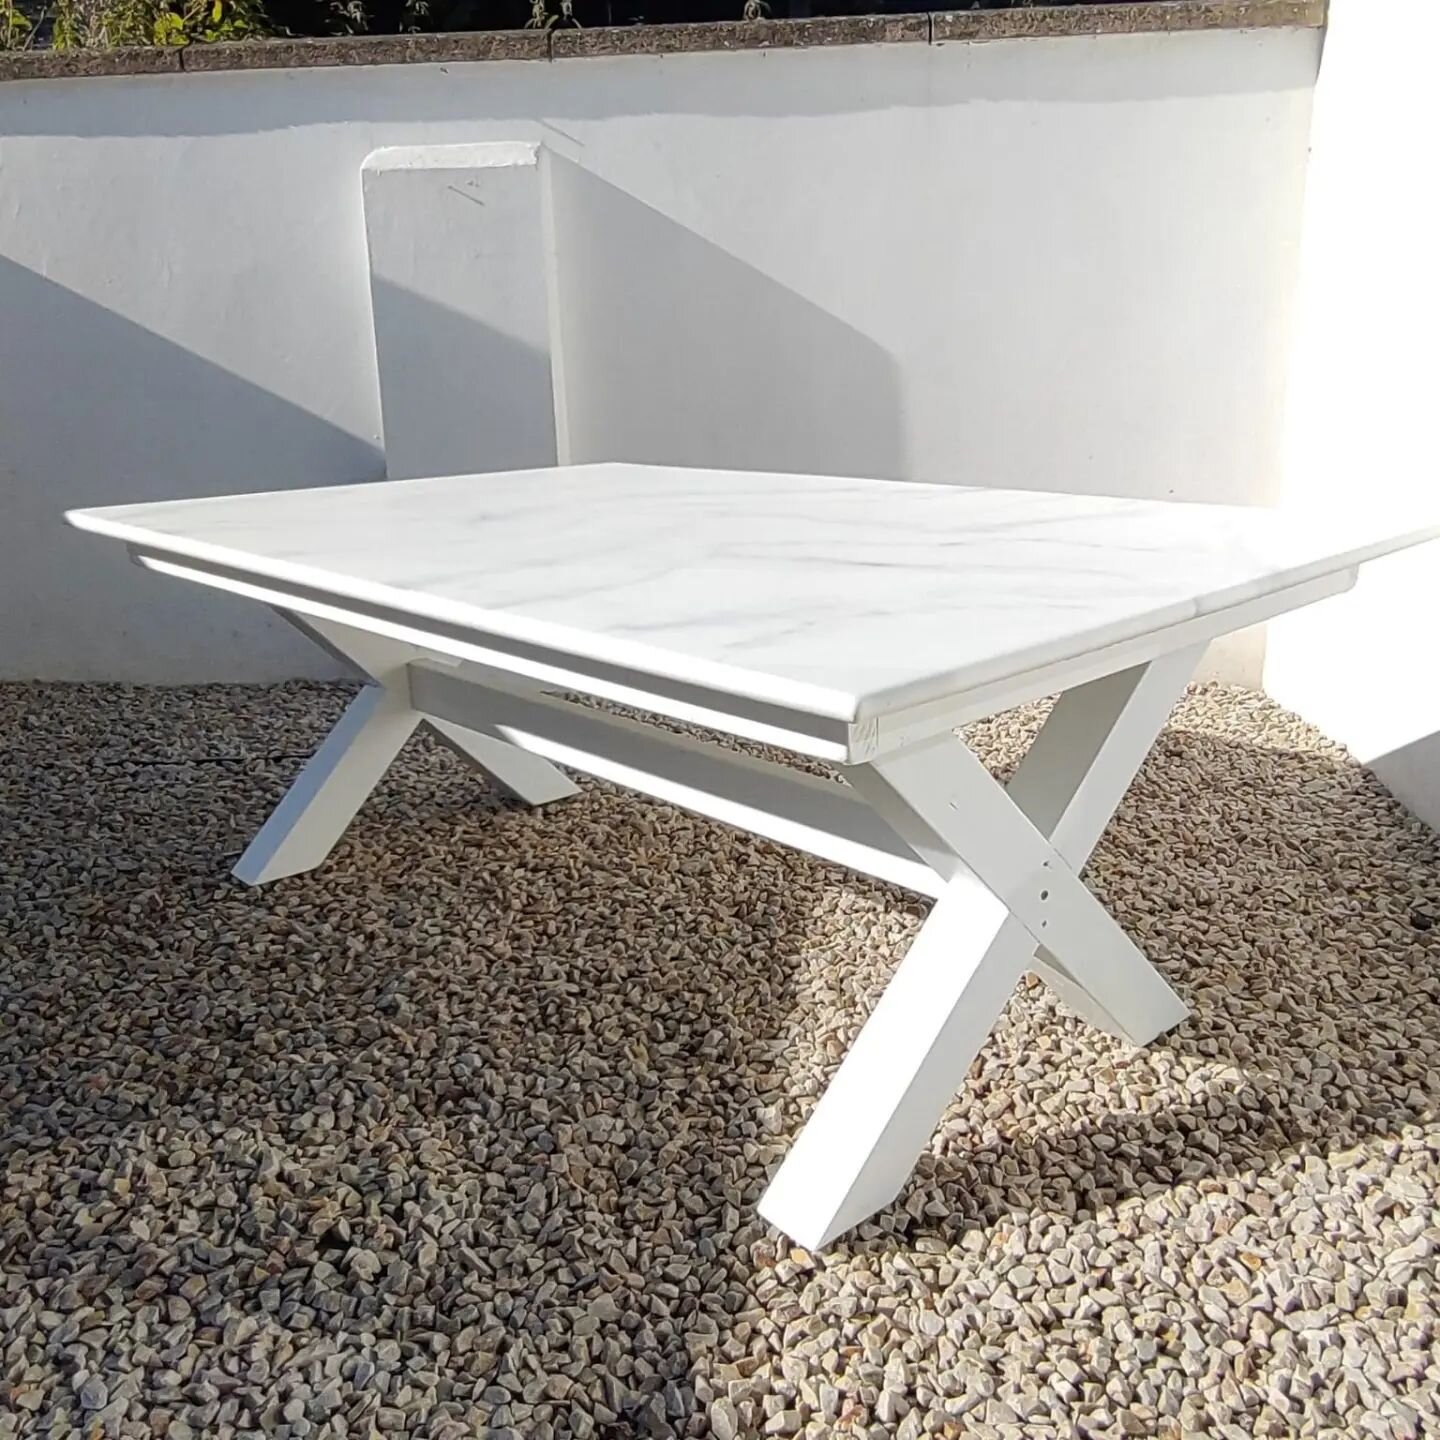 Custom built Outdoor Marble finish epoxy table

#epoxyrox